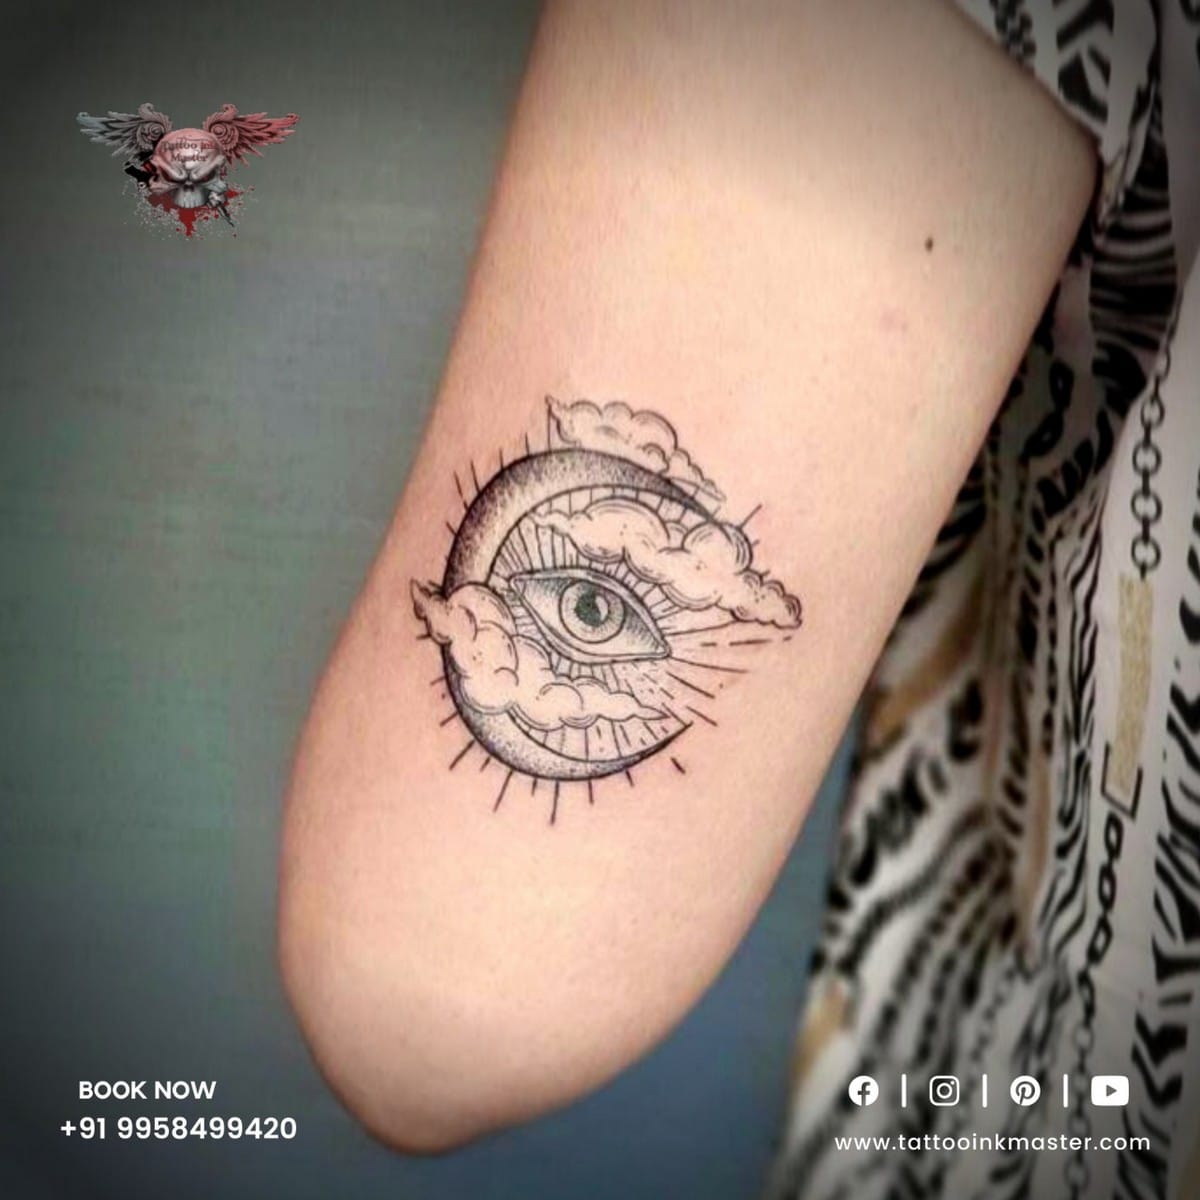 Tribal Tattoos Designs: Best Eye of Ra Tattoos Designs